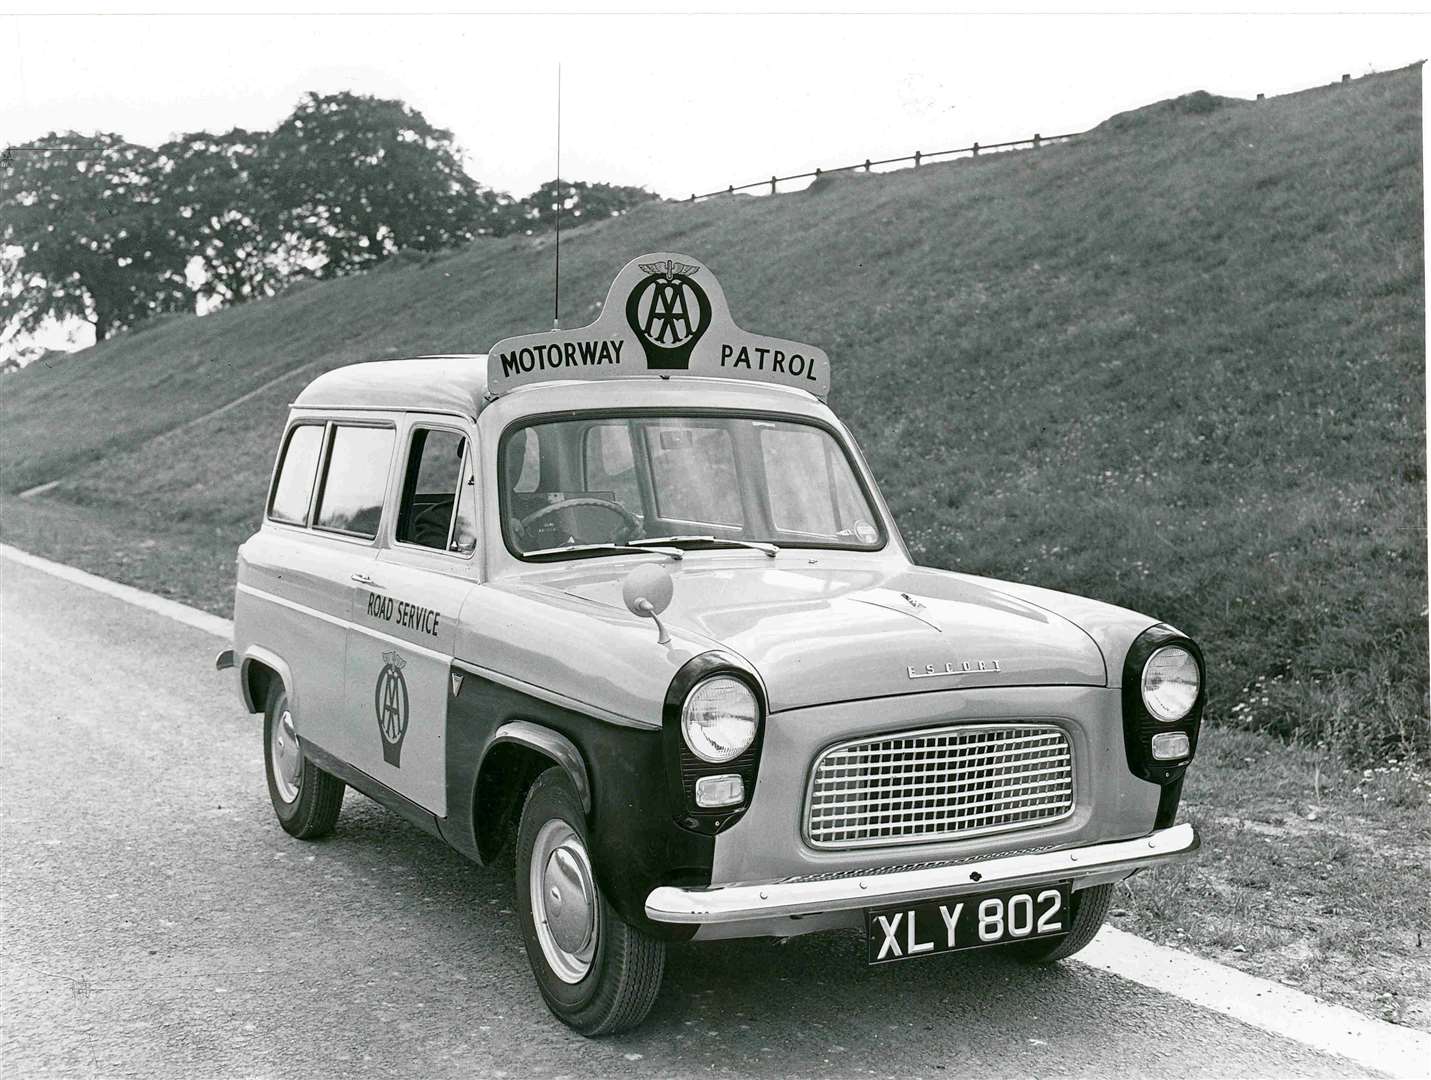 An AA van from 1959 patrolling the M1 motorway (AA/PA)